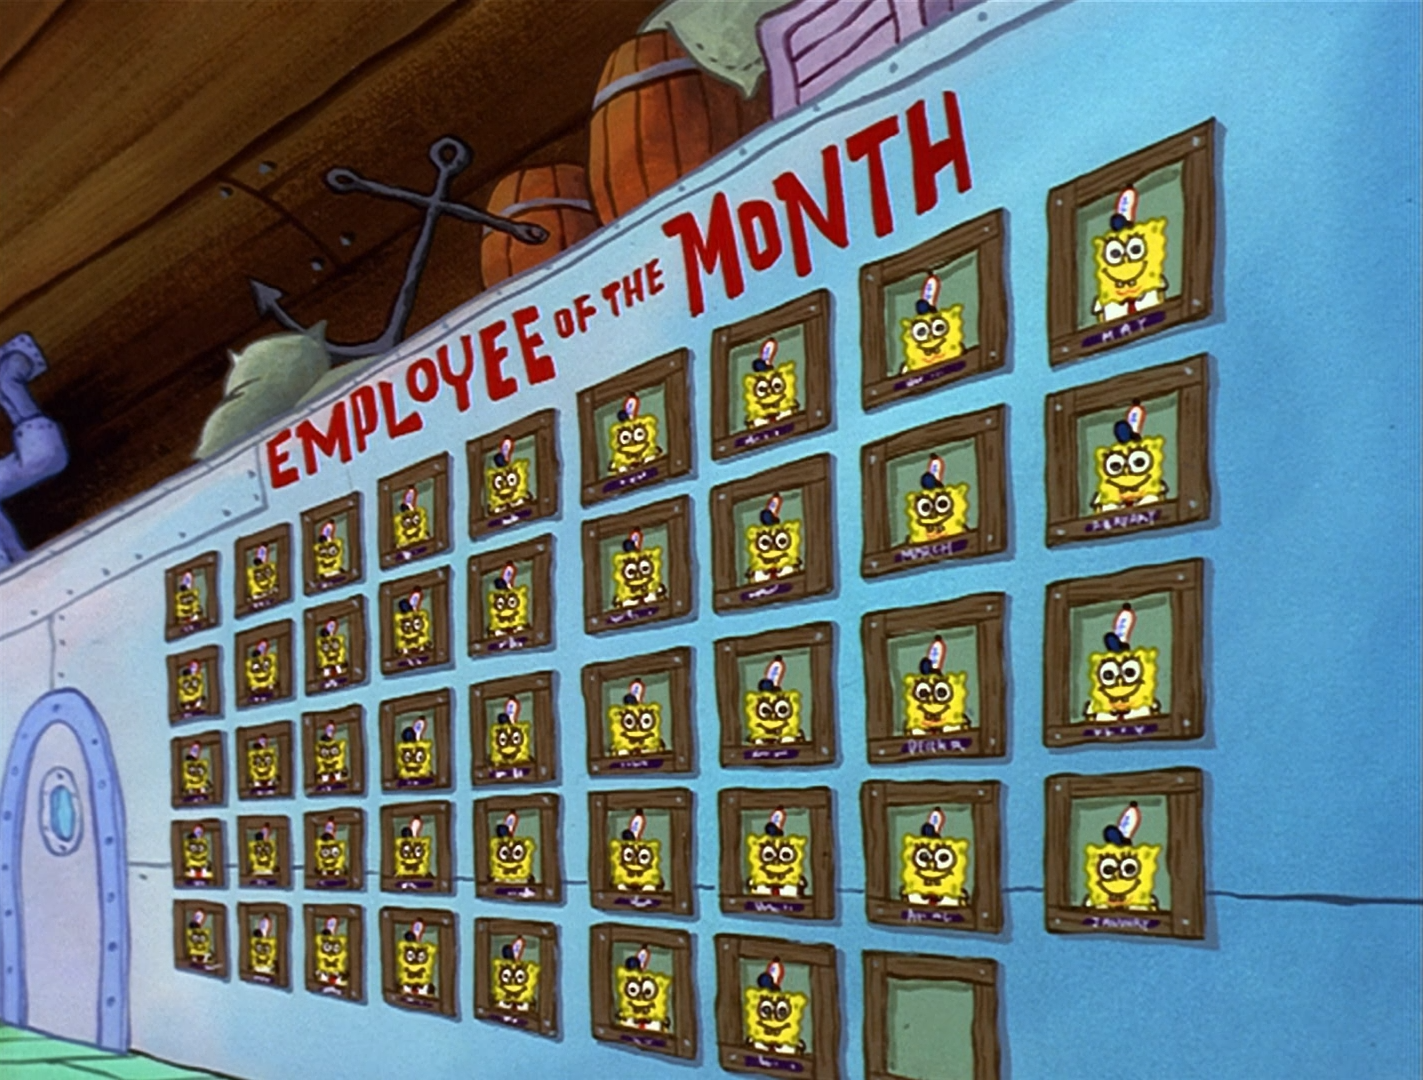 spongebob squarepants employee of the month 1999 putlocker